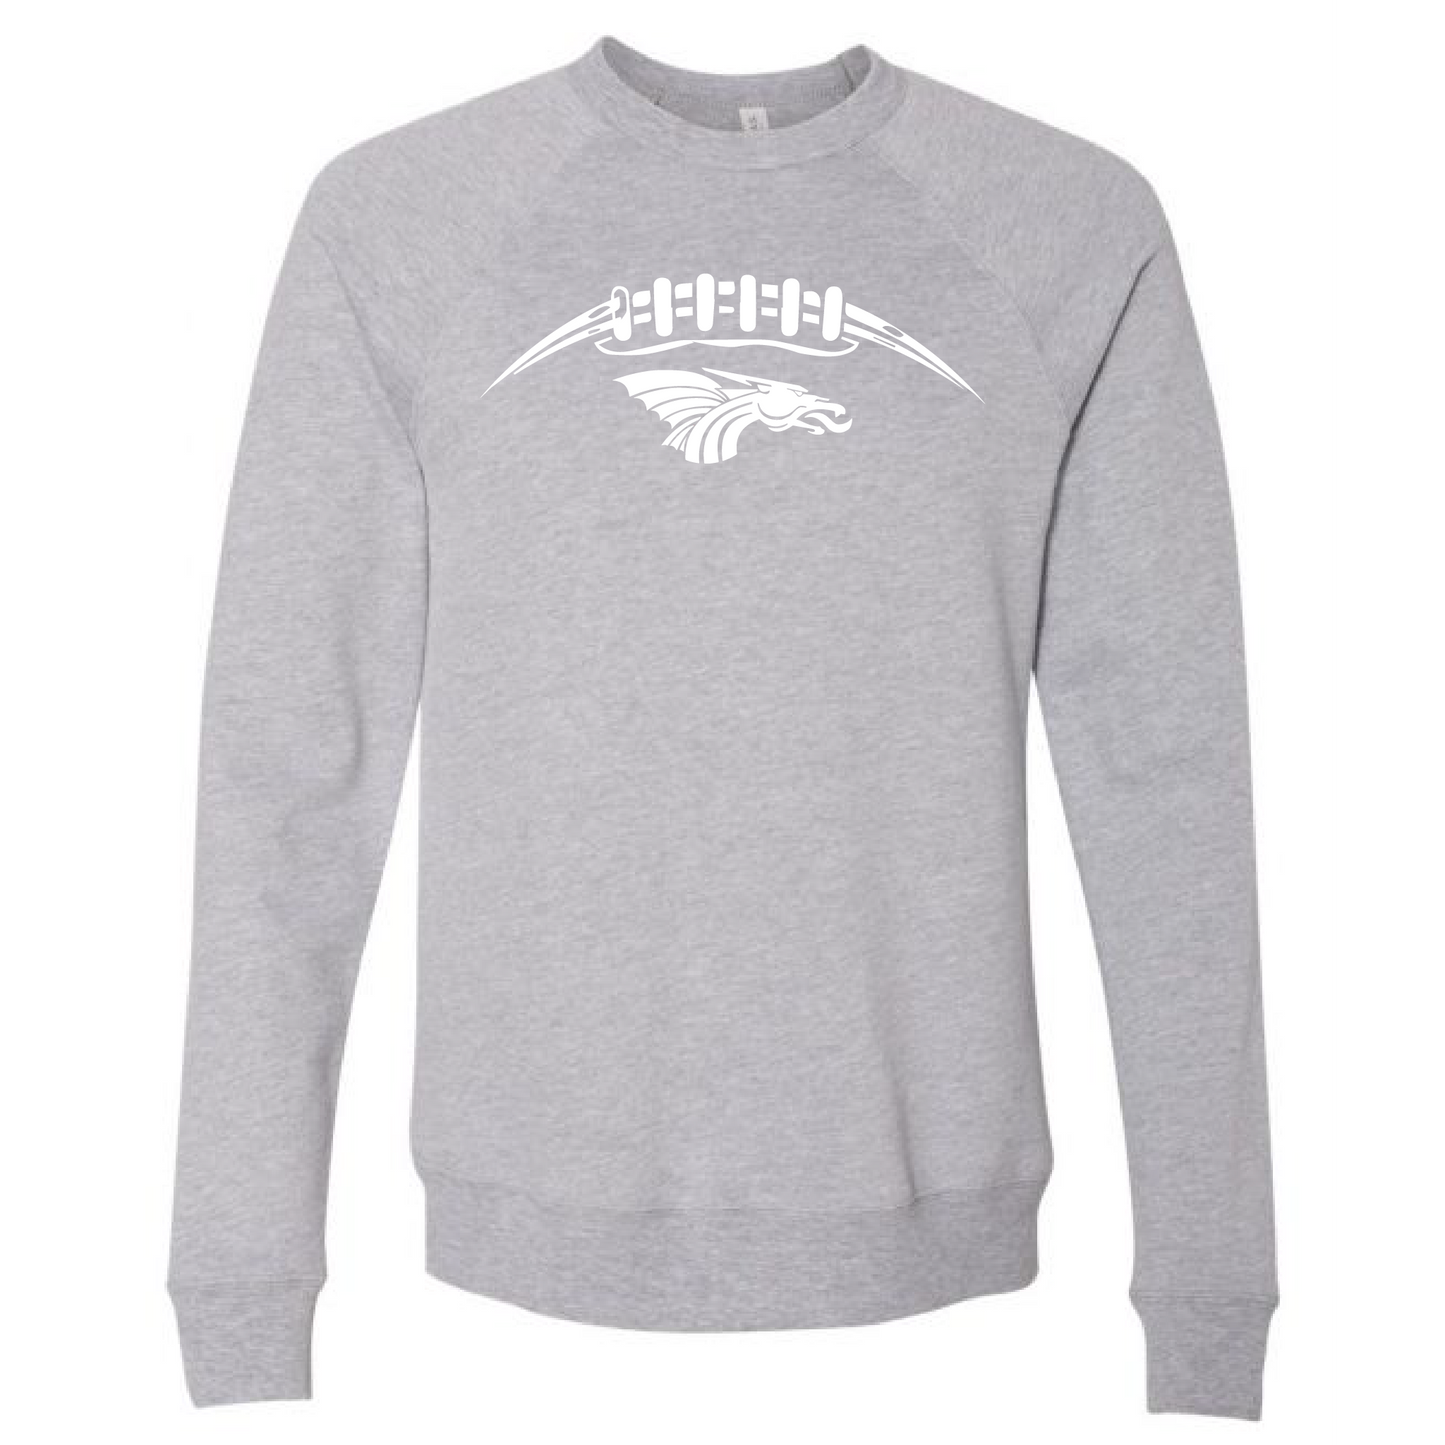 Unisex Sweatshirt - Dragons Football Laces